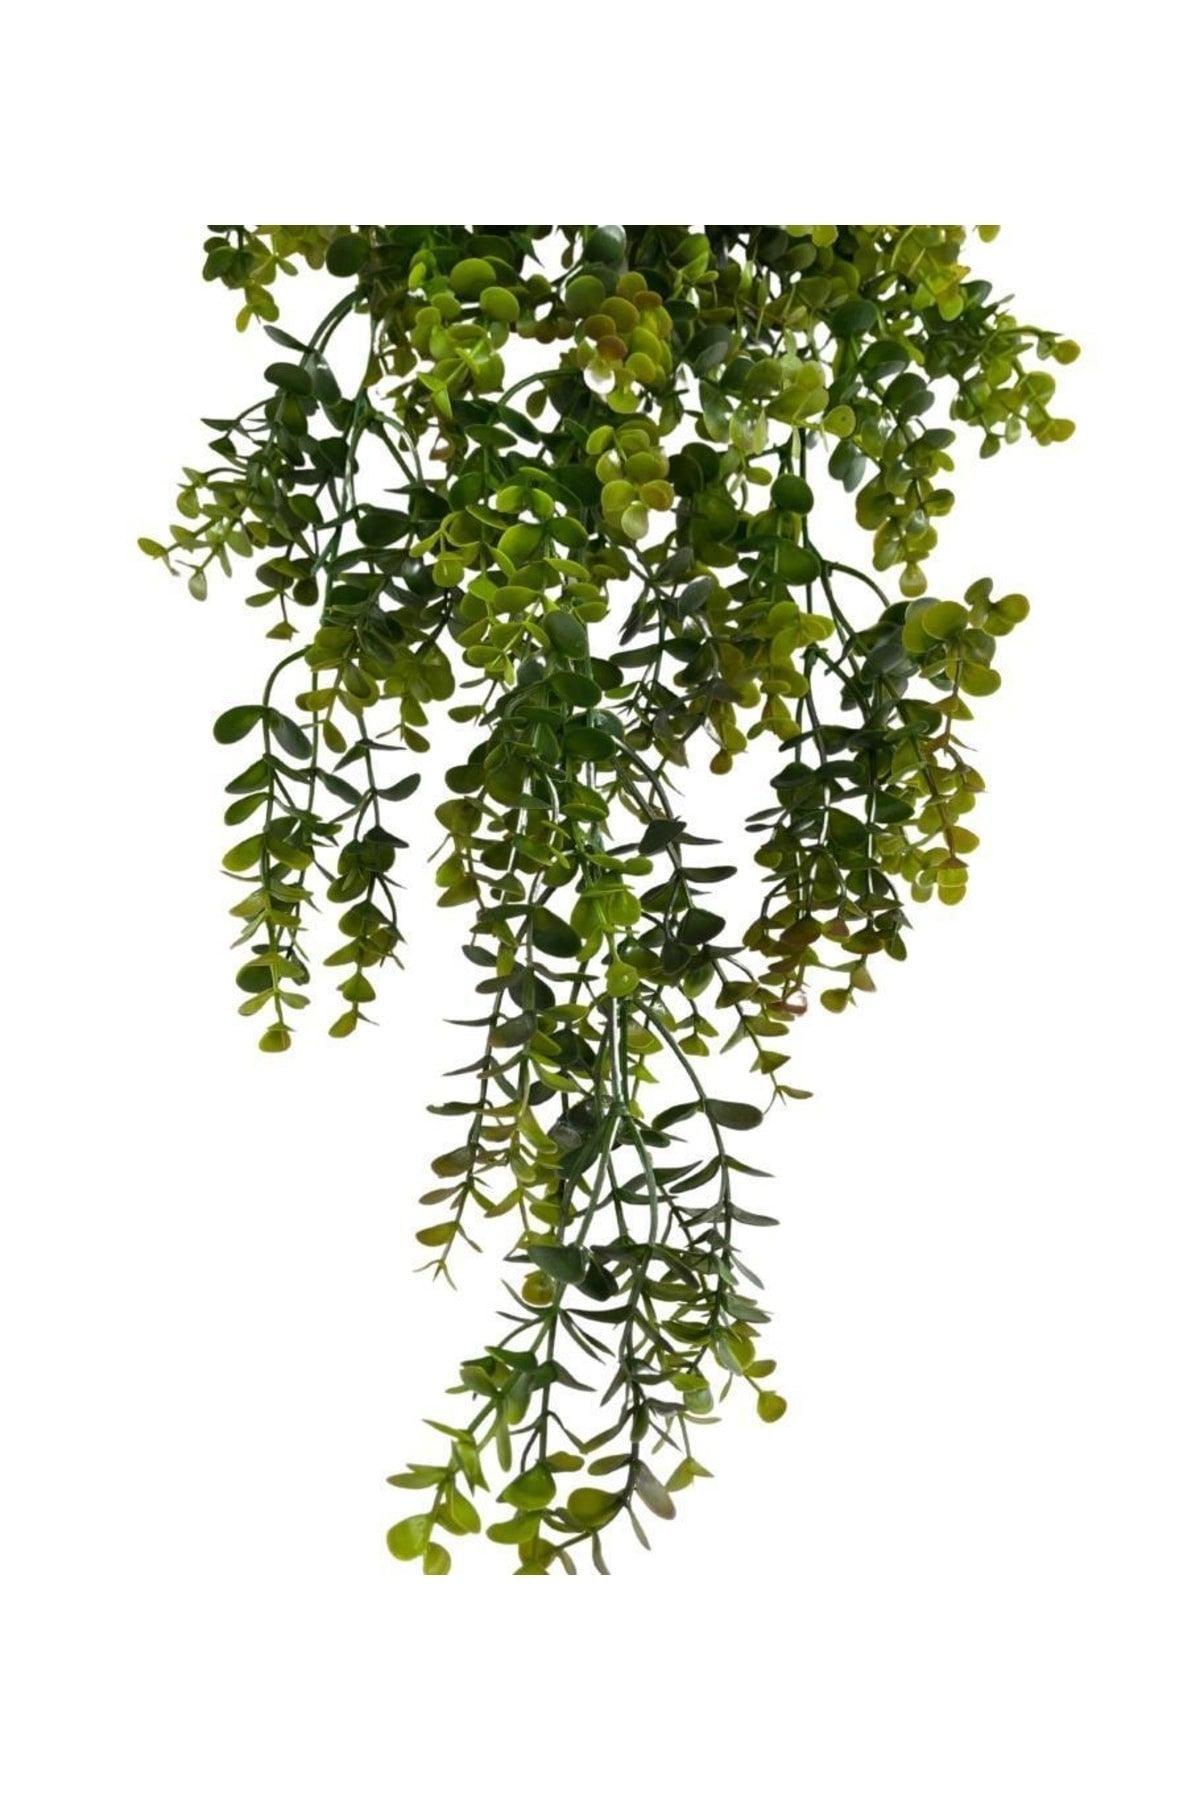 Artificial Flower Pot Hanging Boxwood Brown Green Eucalyptus Artificial Ivy 60cm - Swordslife